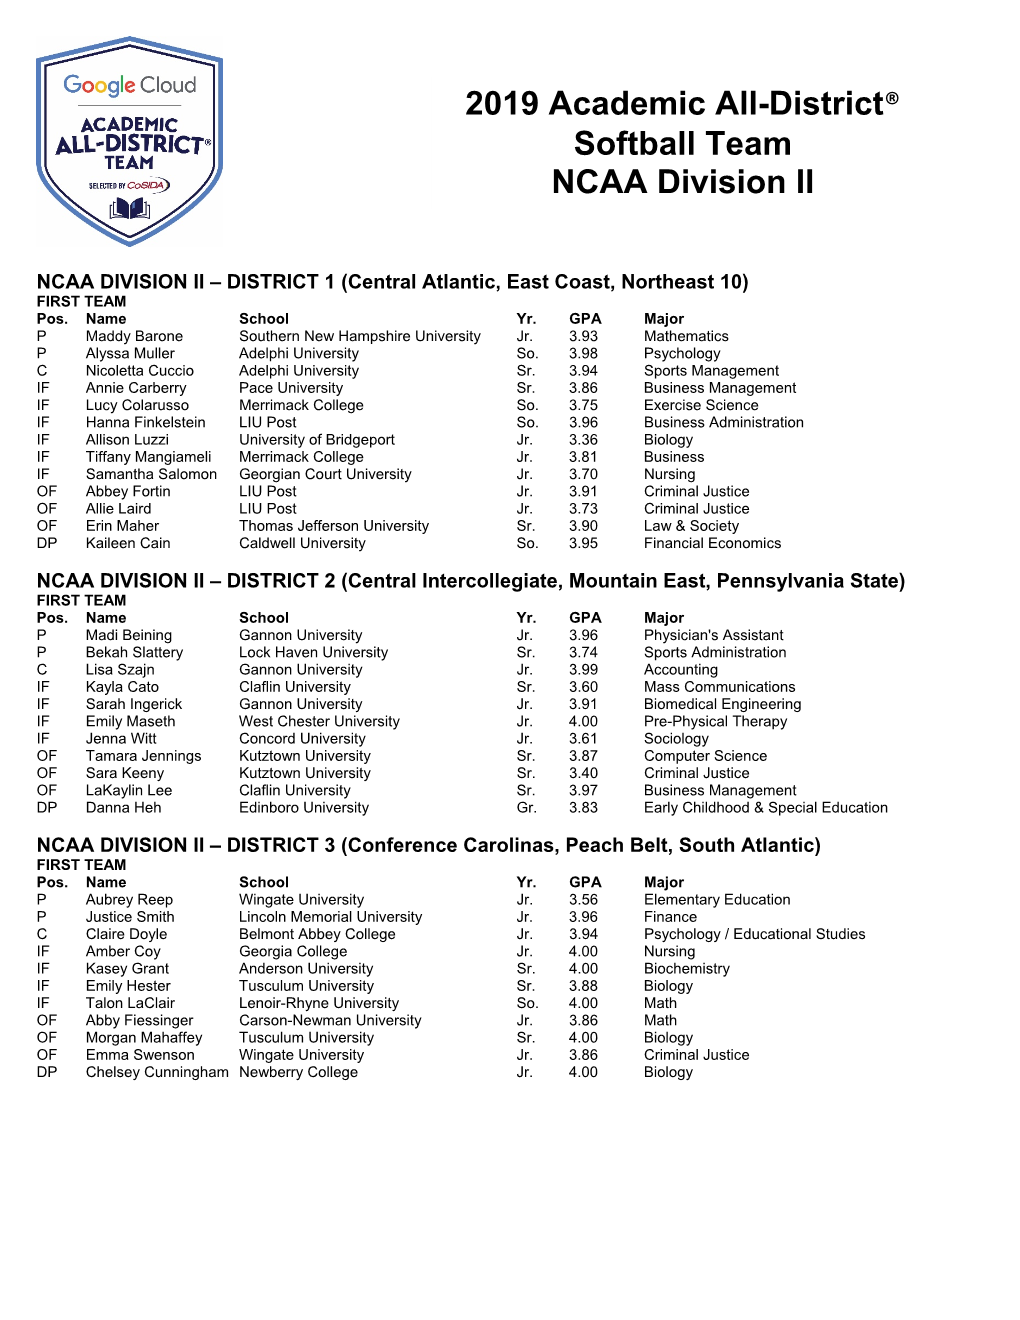 2019 Academic All-District® Softball Team NCAA Division II